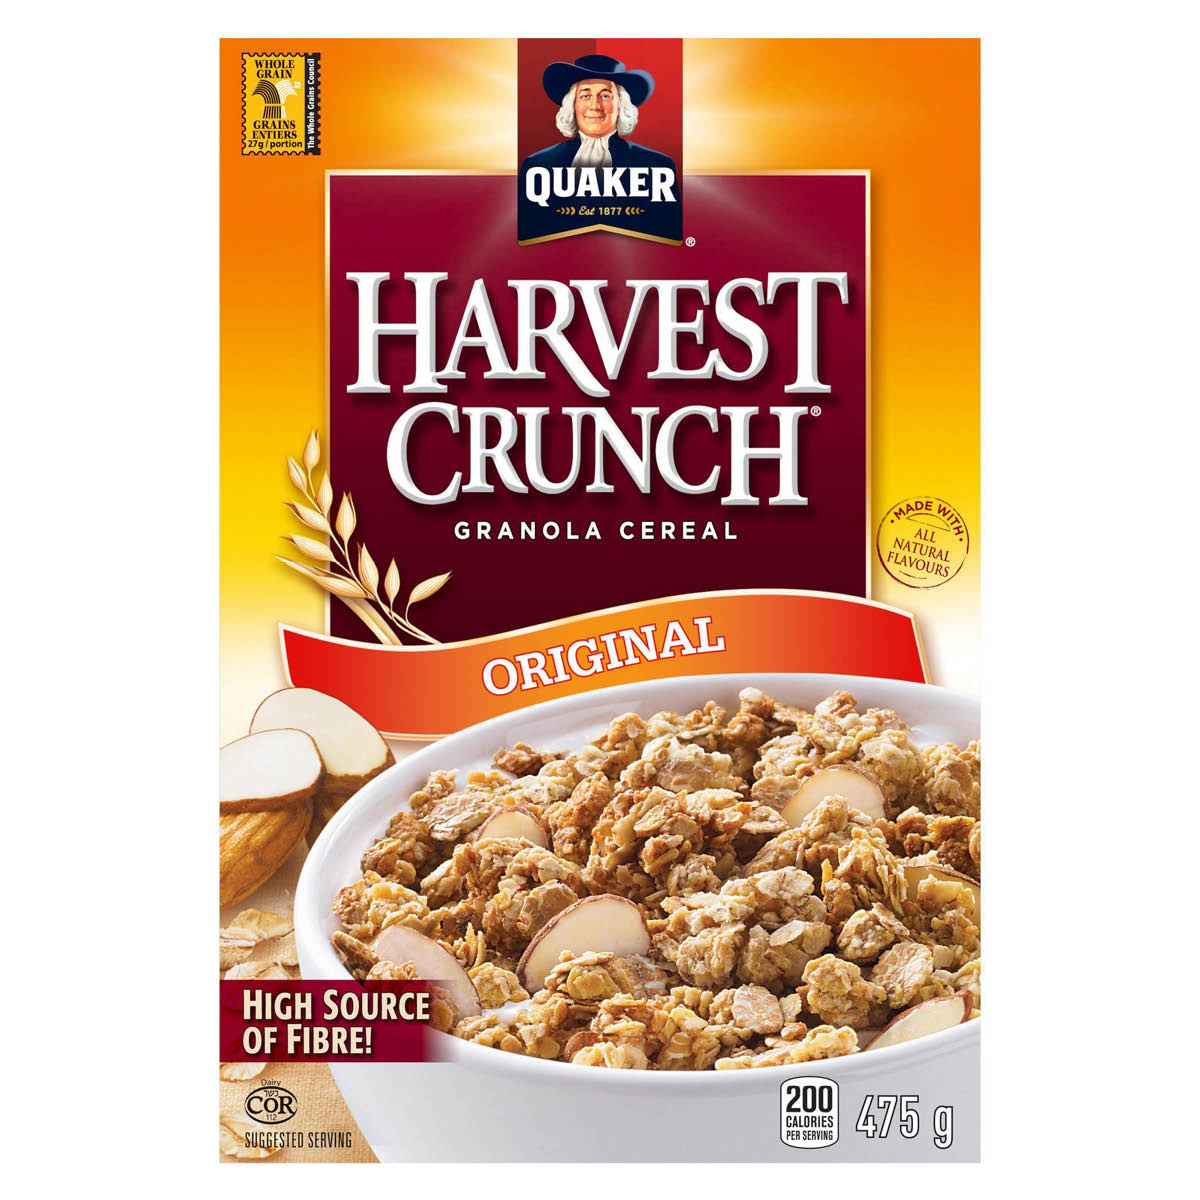 Quaker Harvest Crunch Original Cereal, 475g